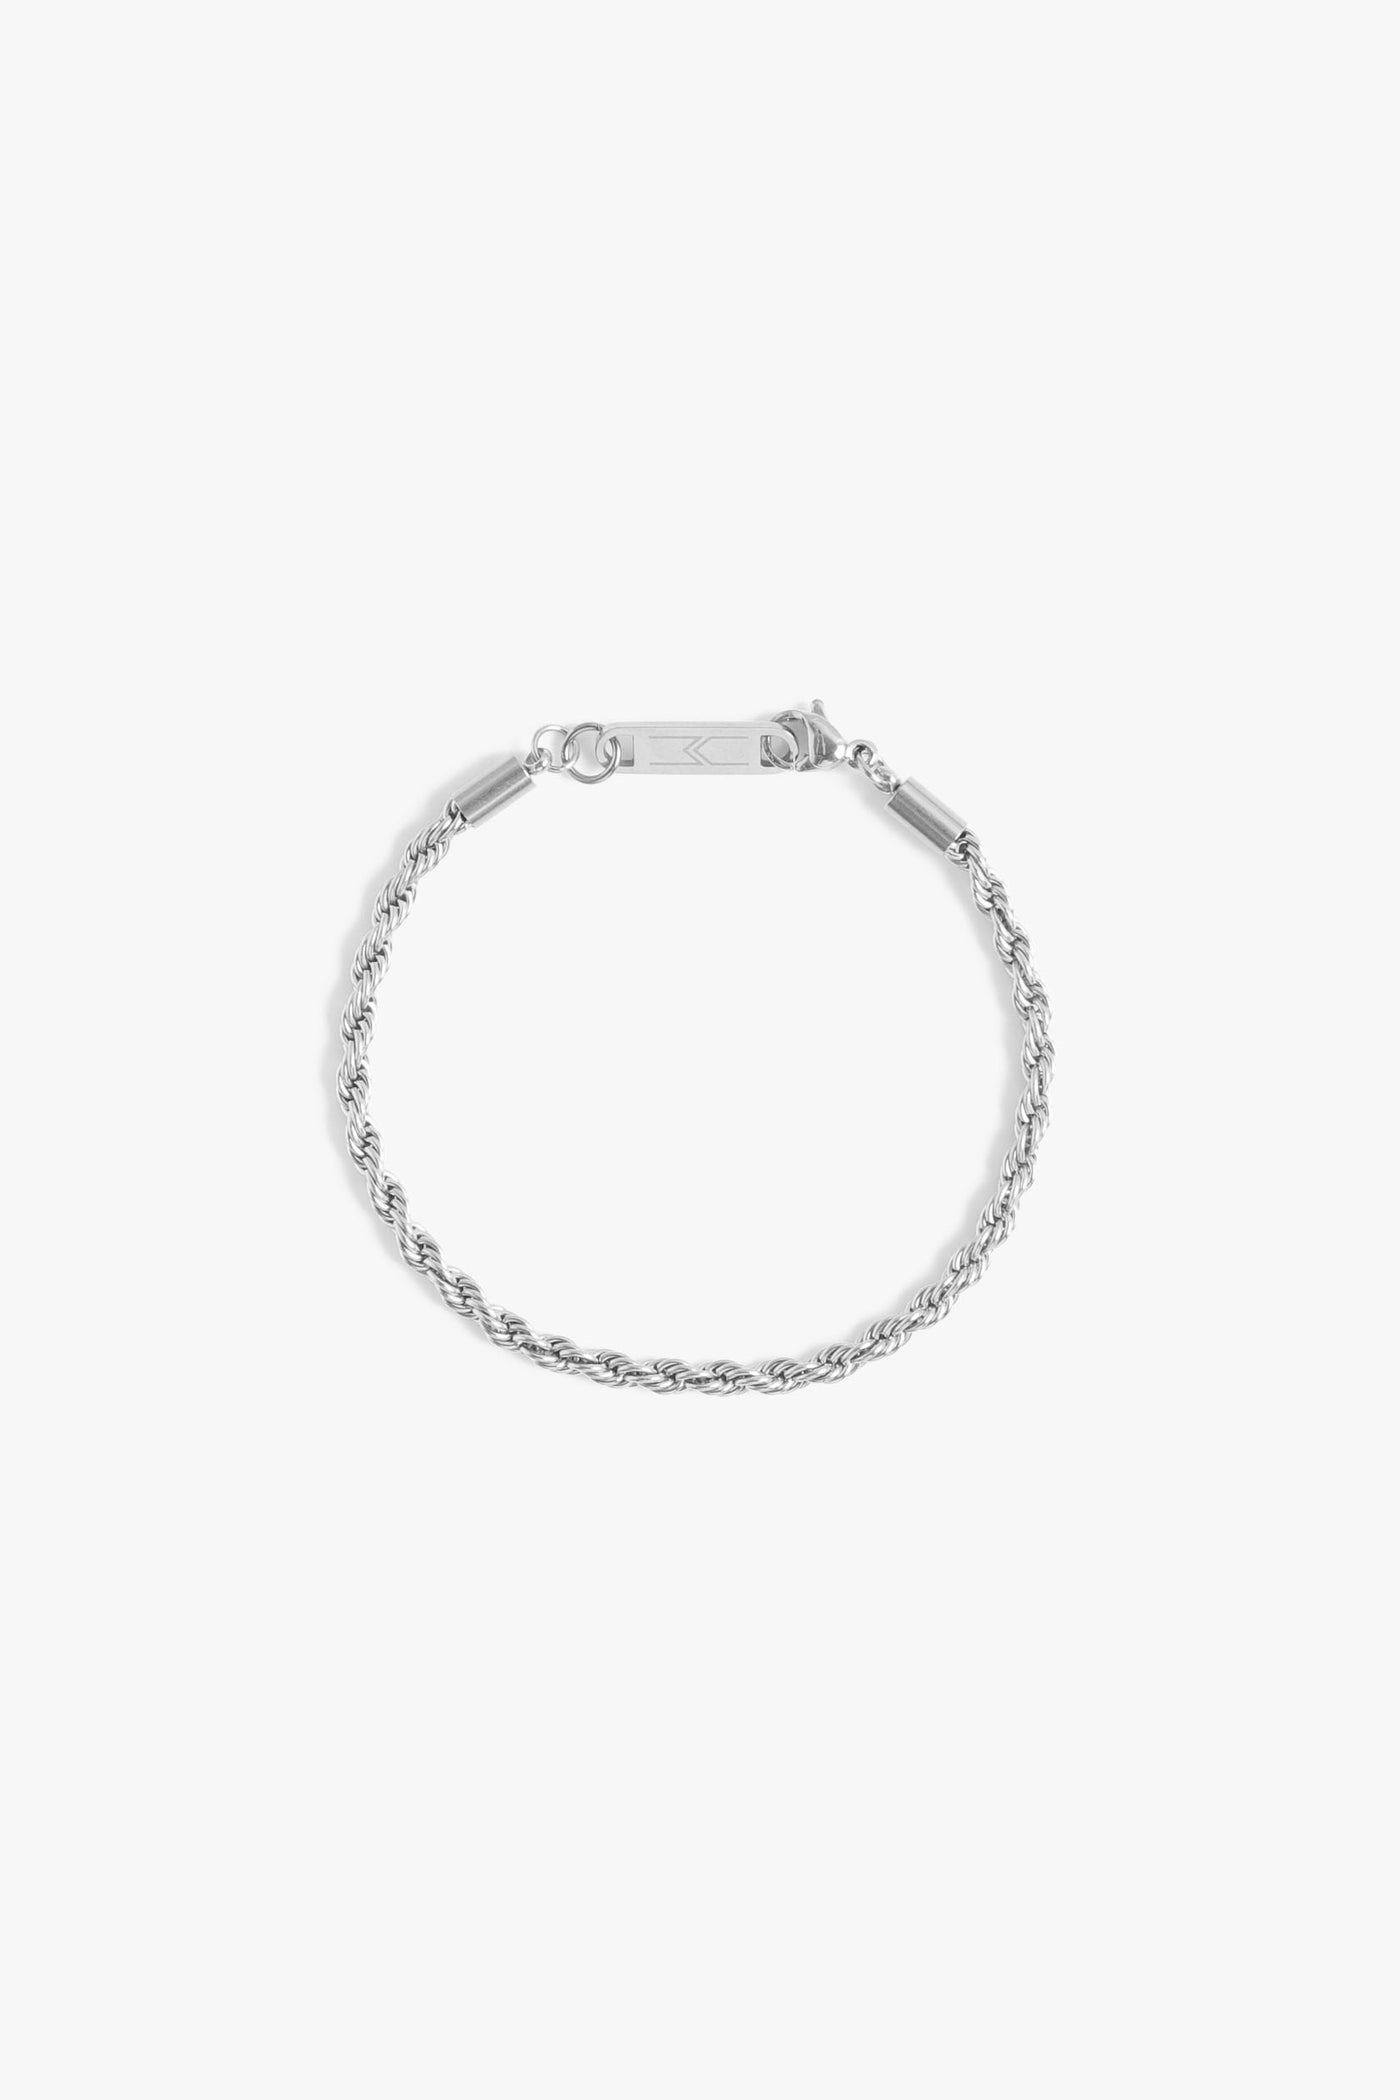 Marrin Costello Jewelry Helix 3mm rope twist chain bracelet. Waterproof, sustainable, hypoallergenic. Polished stainless steel.